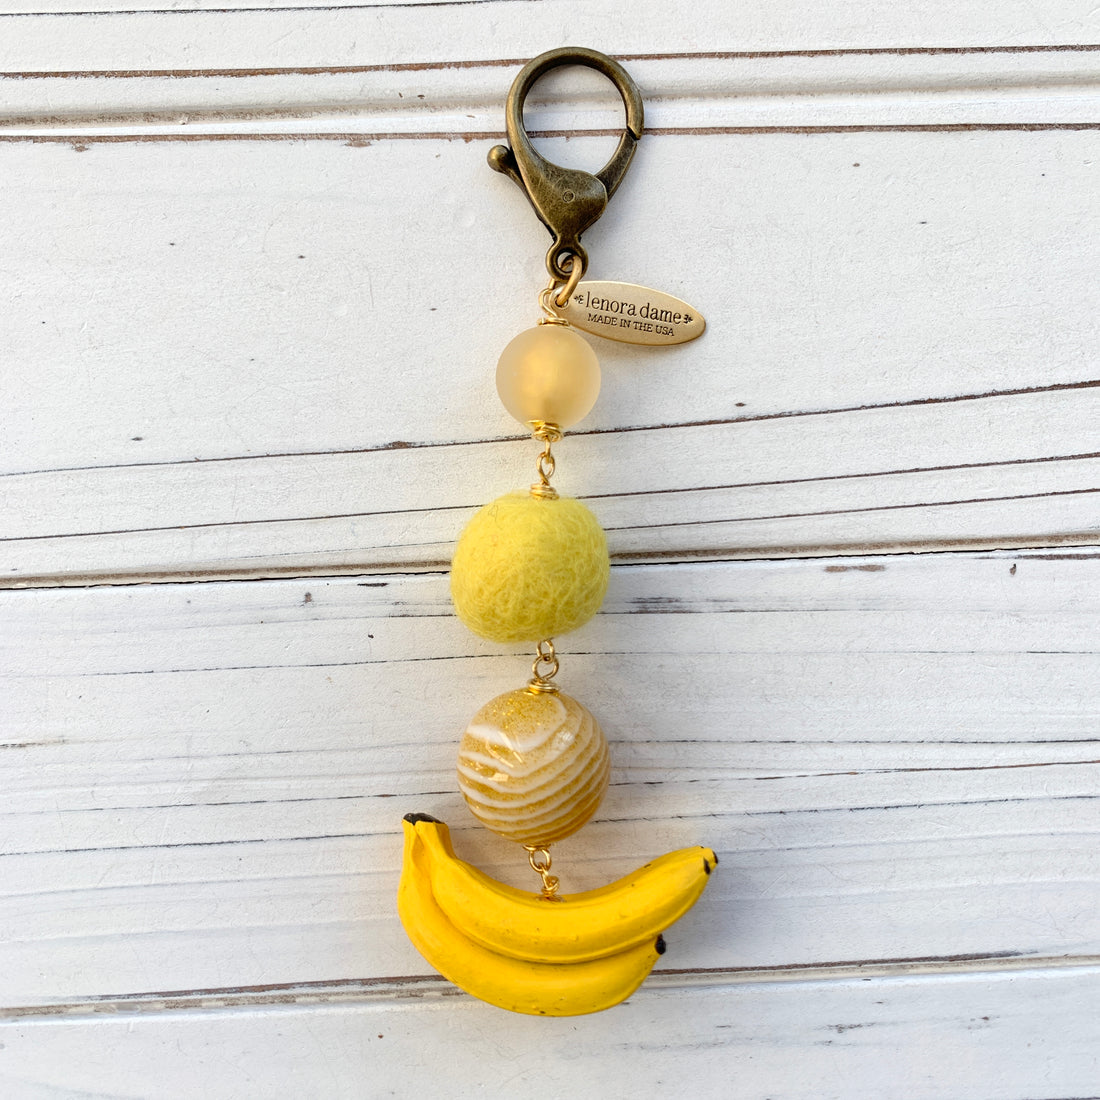 promotional creative portable banana shaped coin| Alibaba.com